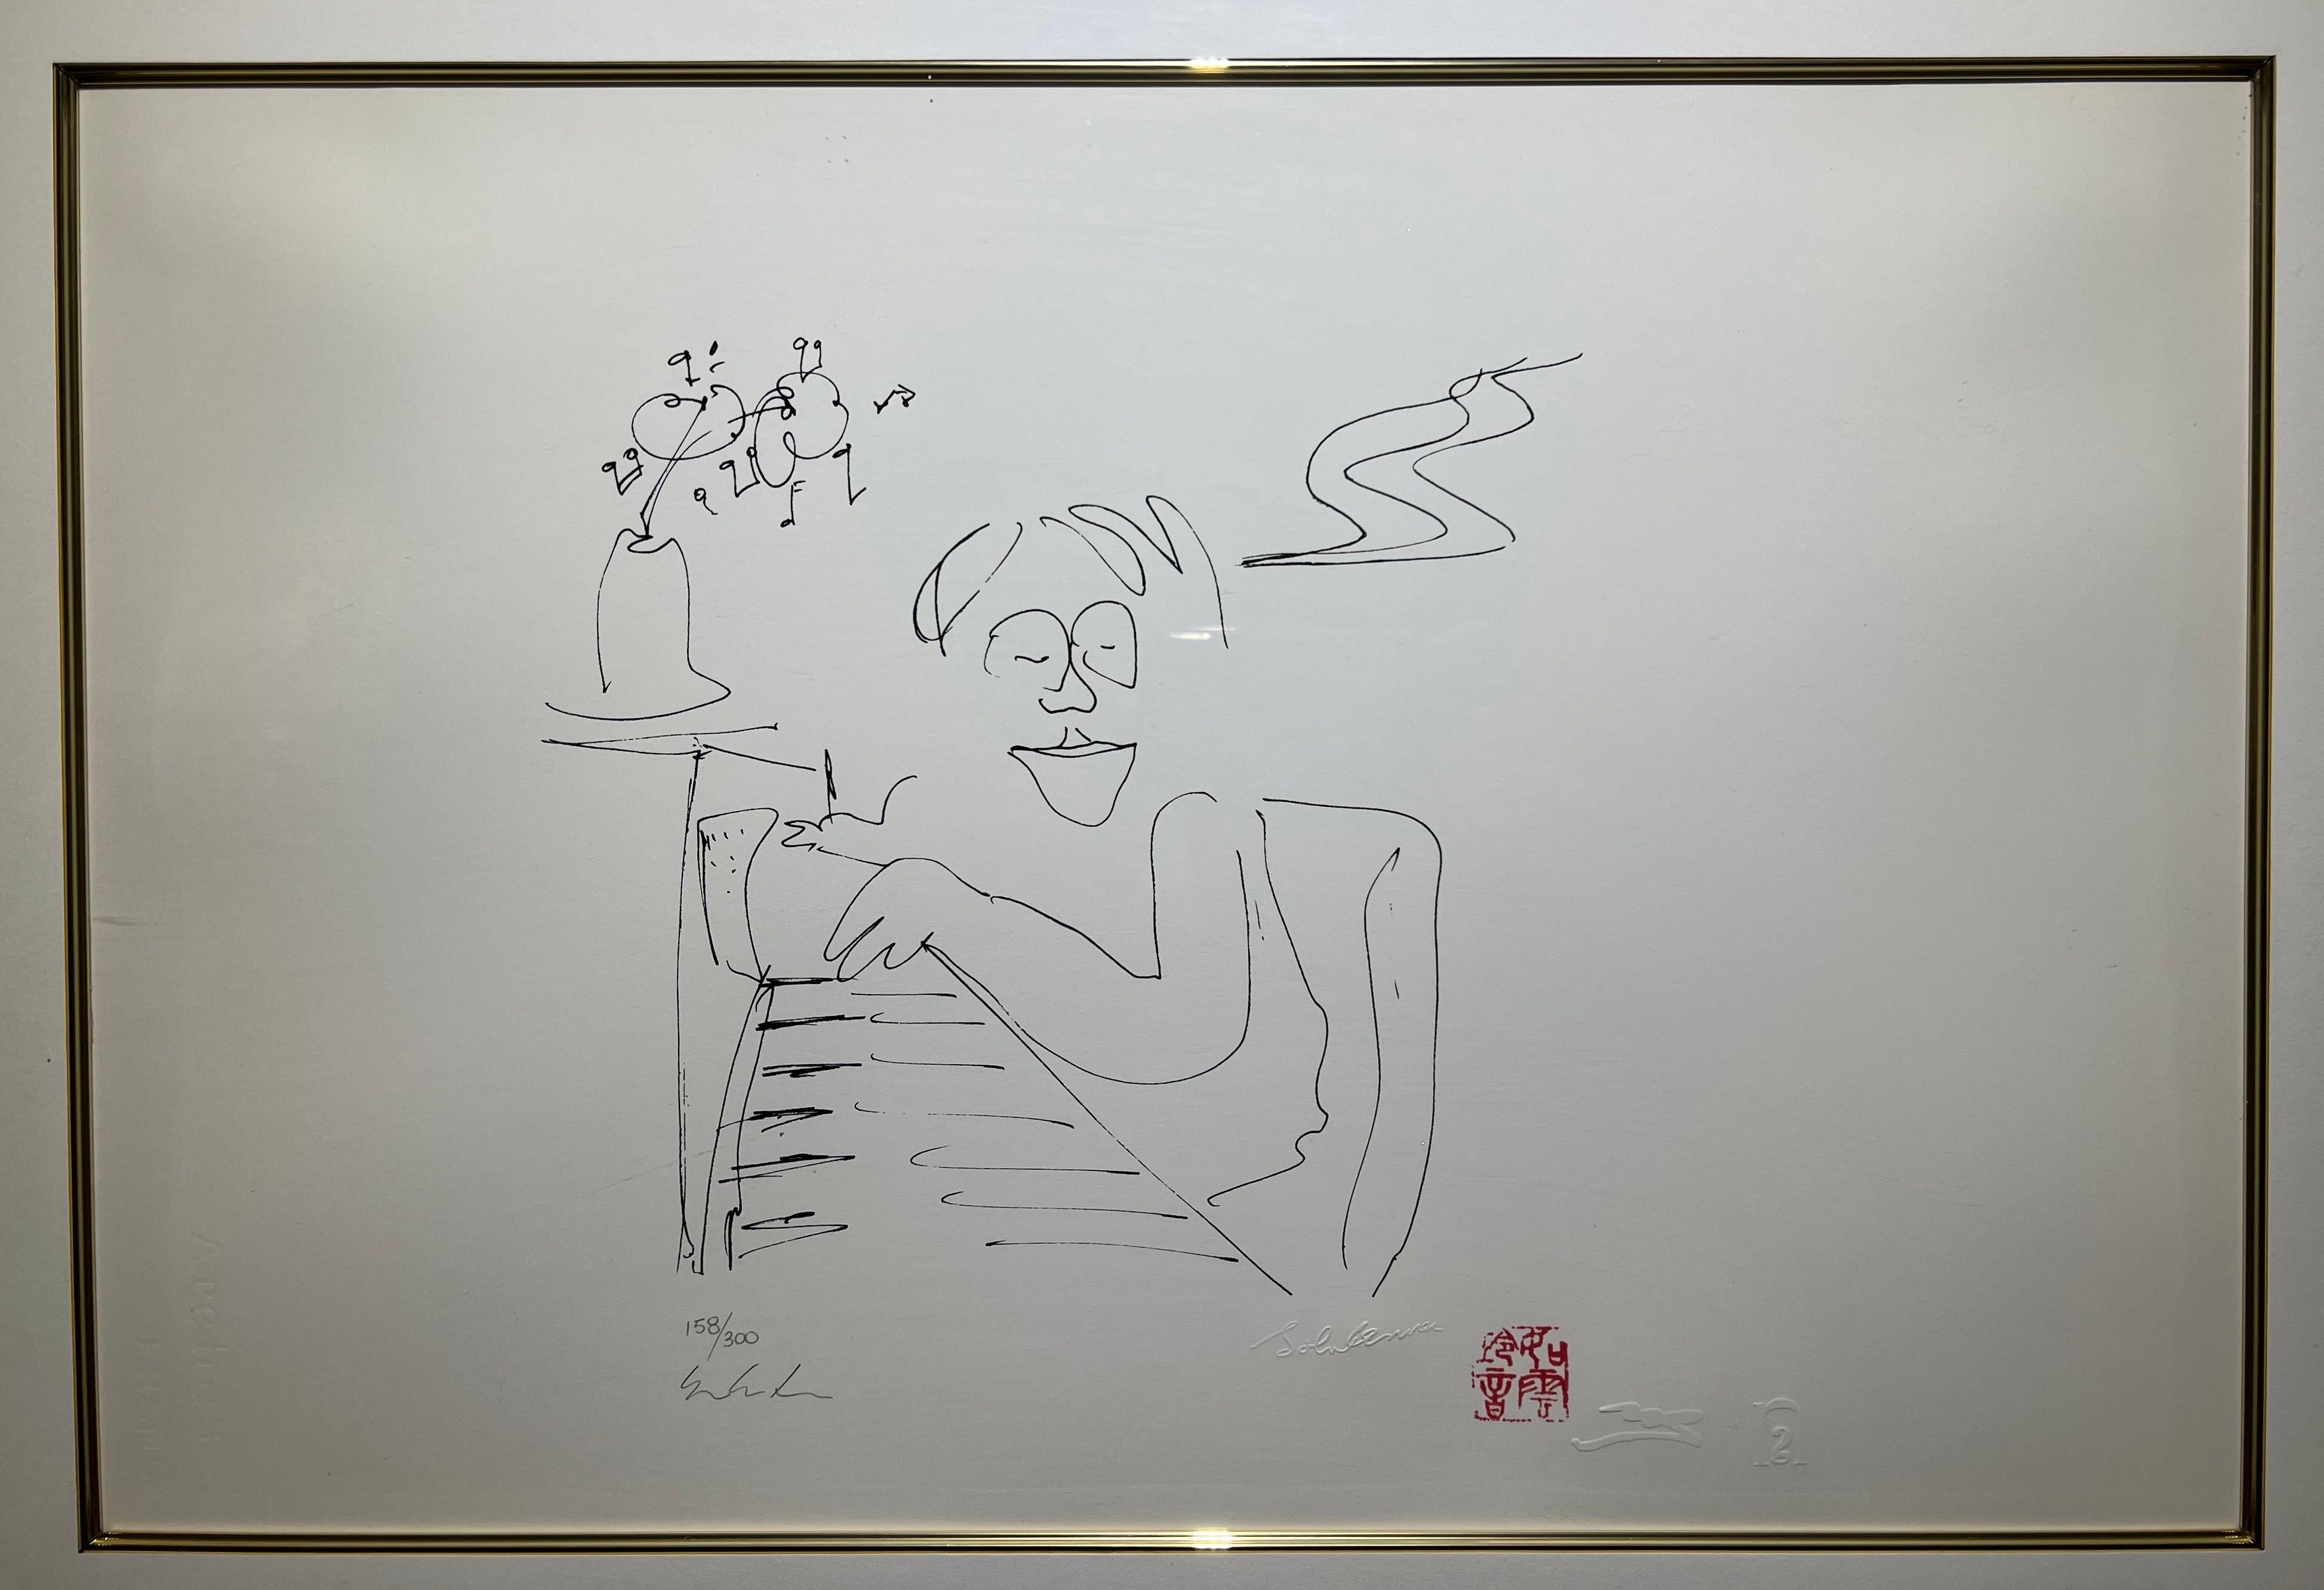 Abstract Print John Lennon - BABY GRAND sign  la main par Yoko Ono, dition 158/300 